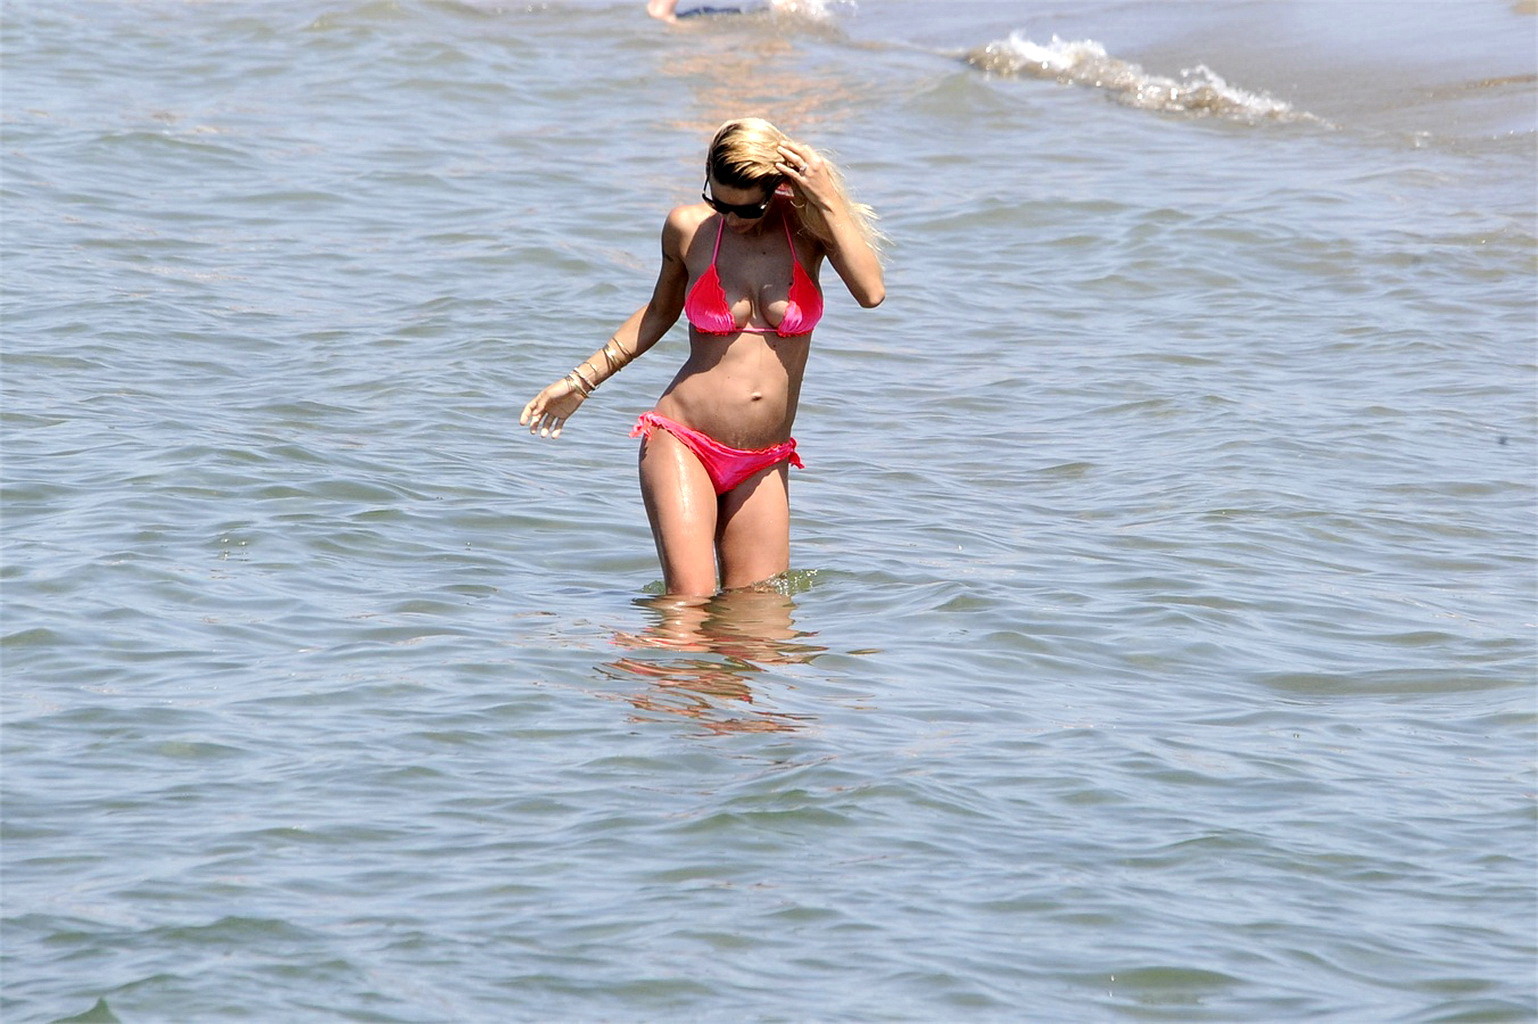 Michelle hunziker embarazada con un bikini en la playa de forte dei marmi, ita
 #75227907